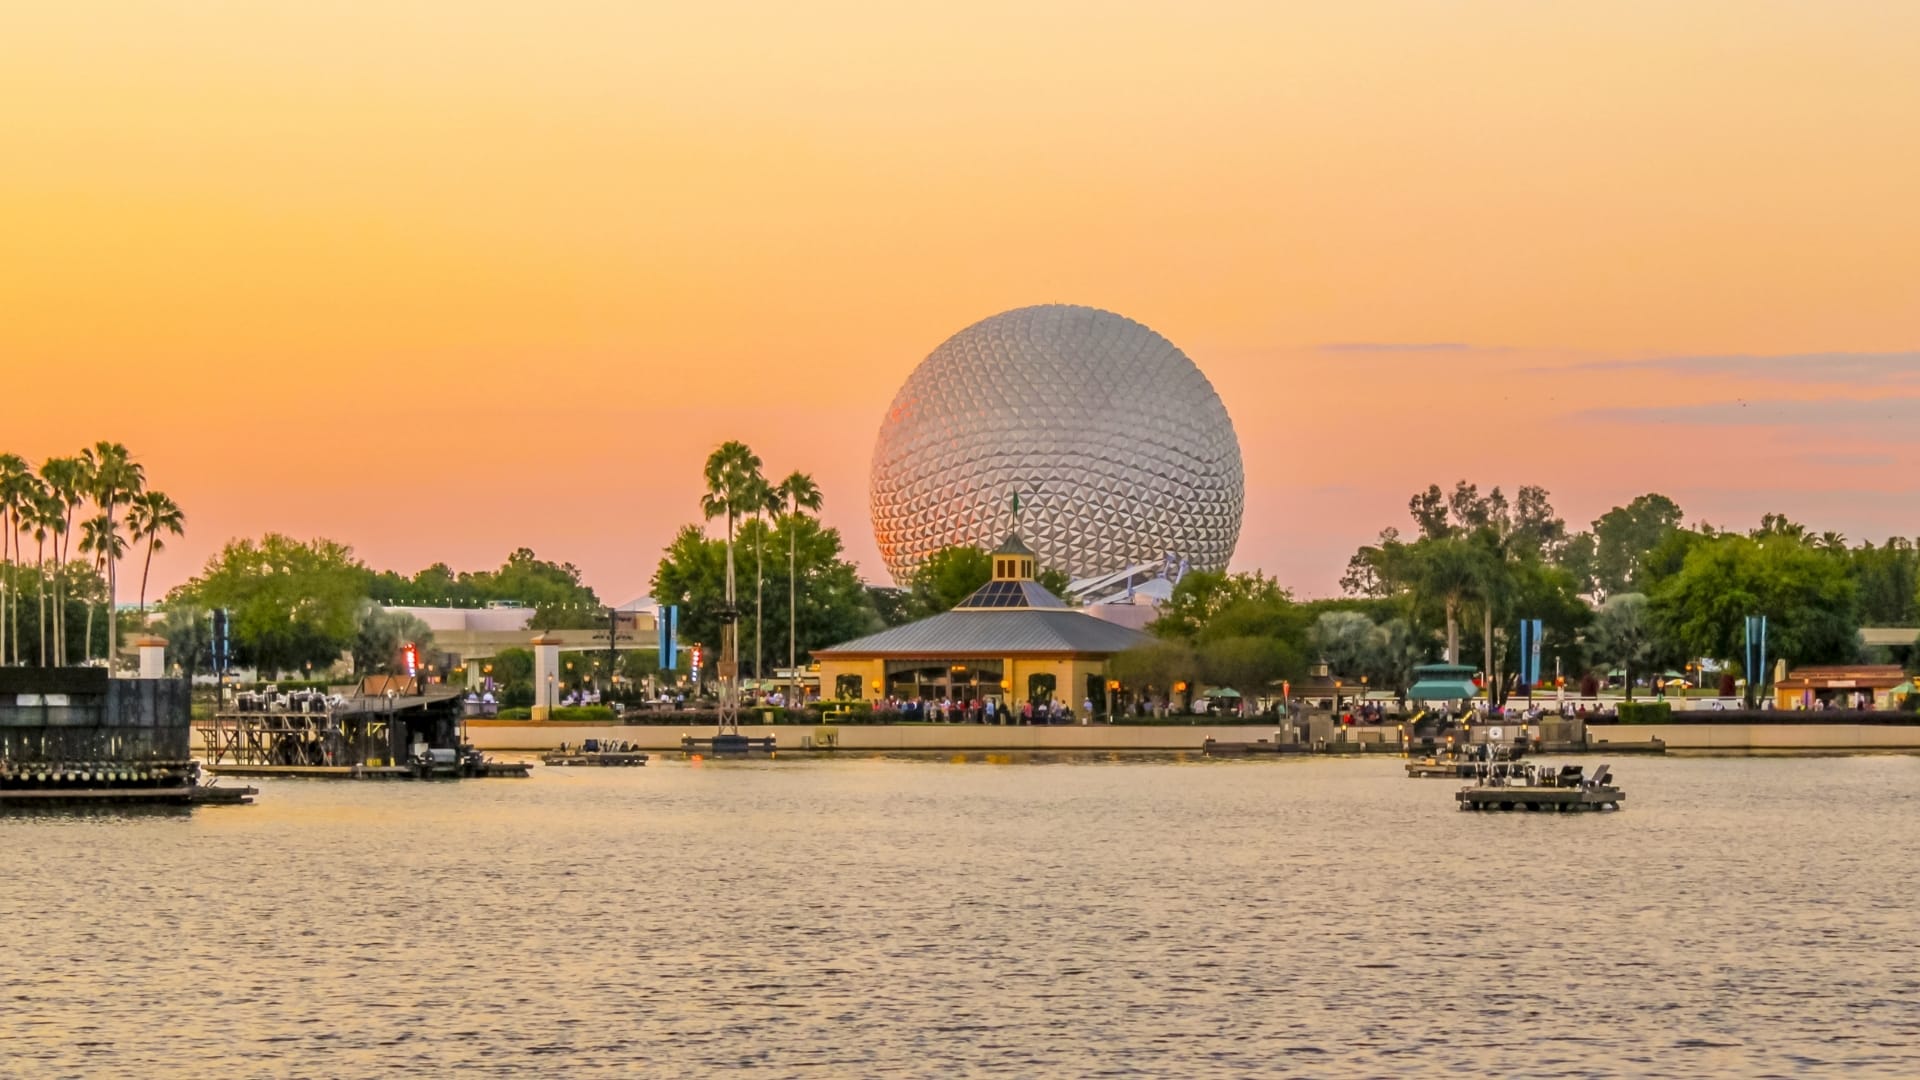 Disney World - Epcot at Sunset in Orlando